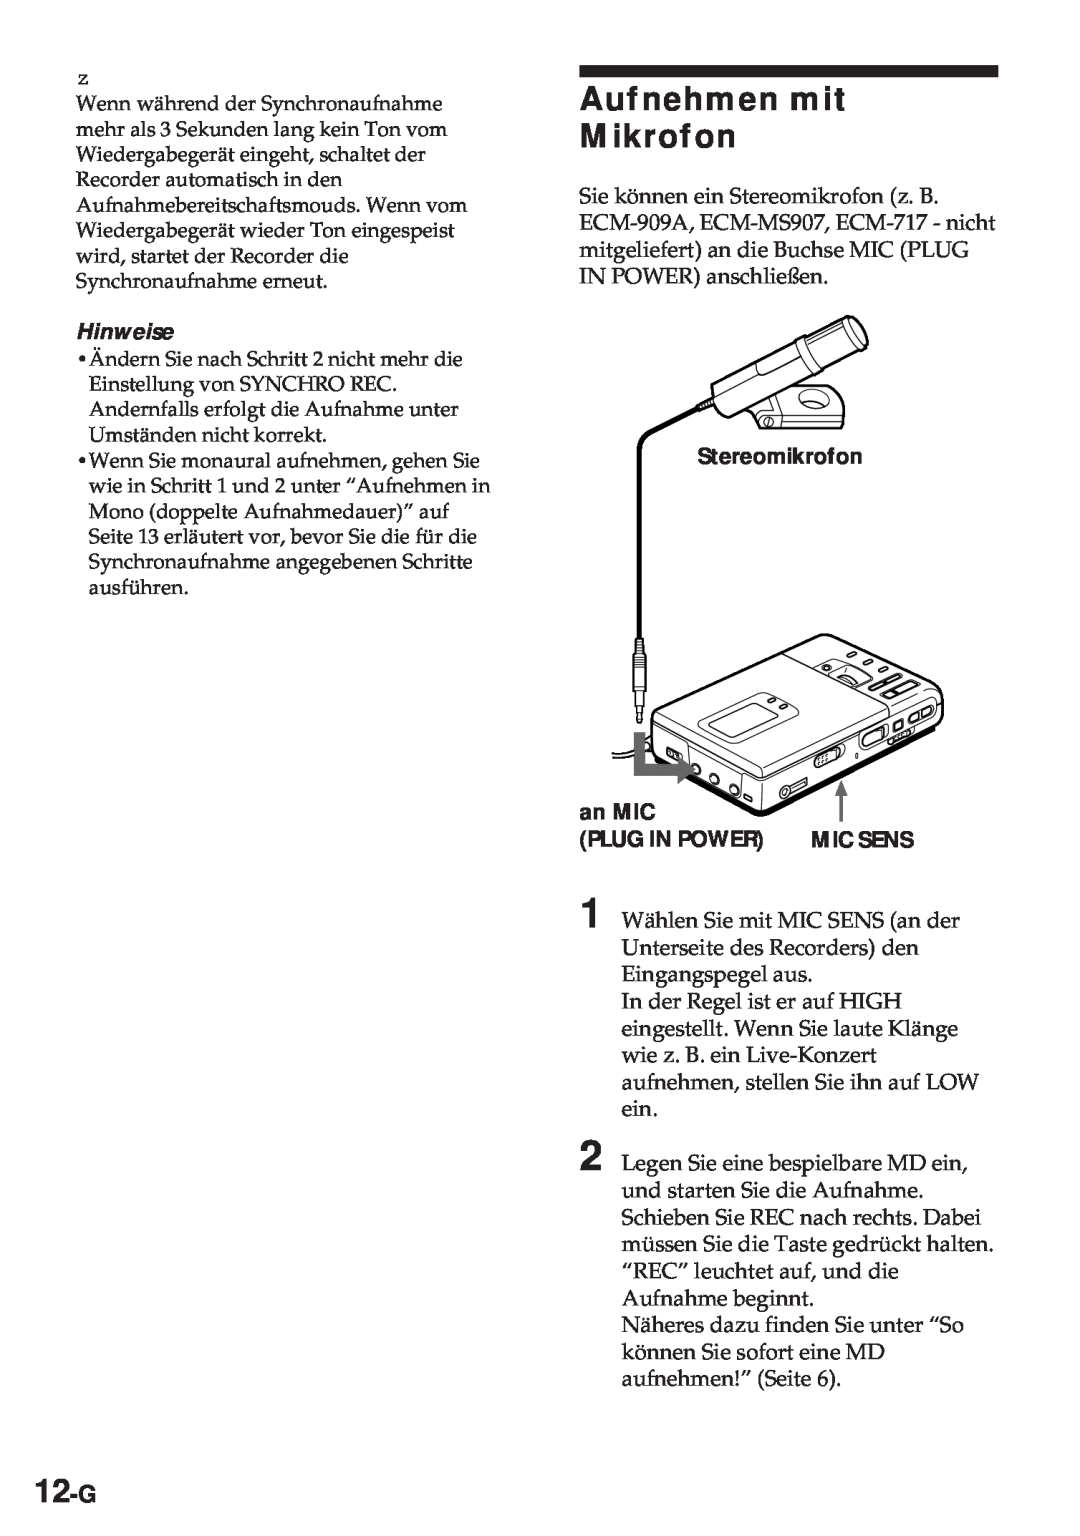 Sony MZ-R30 operating instructions Aufnehmen mit Mikrofon, 12-G, Hinweise, Stereomikrofon, an MIC, Plug In Power 